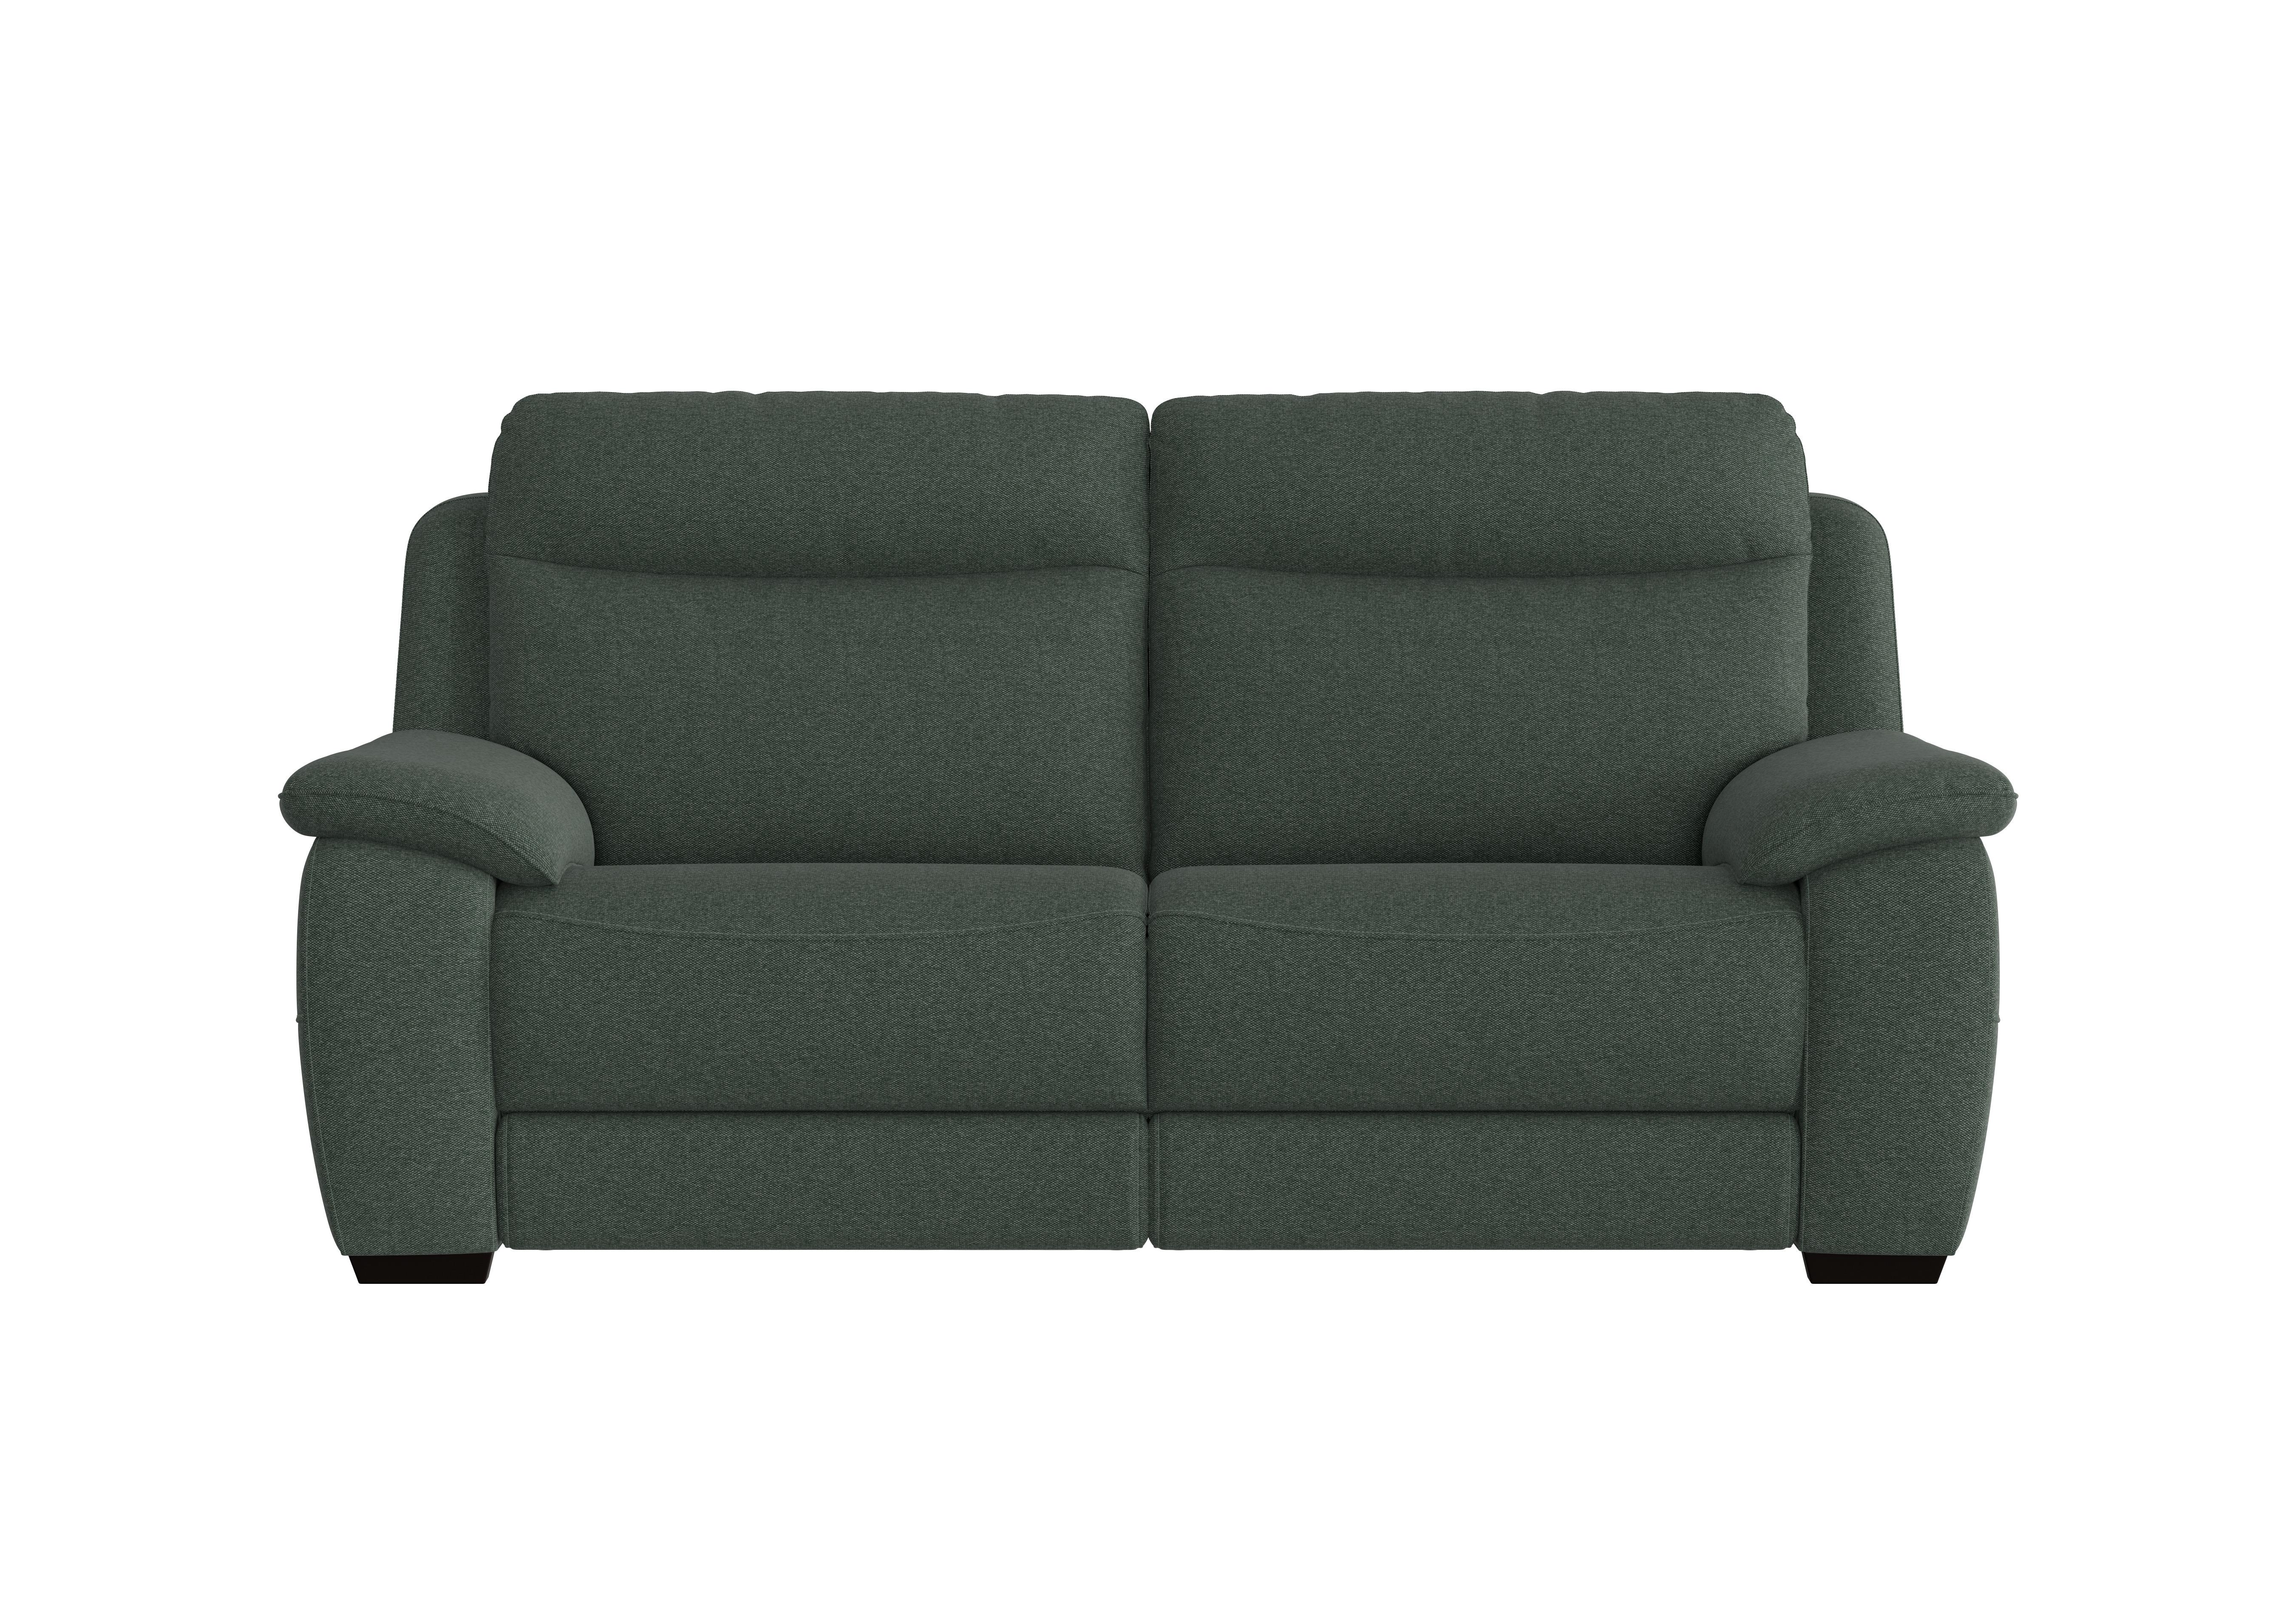 Starlight Express 3 Seater Fabric Sofa in Fab-Ska-R48 Moss Green on Furniture Village